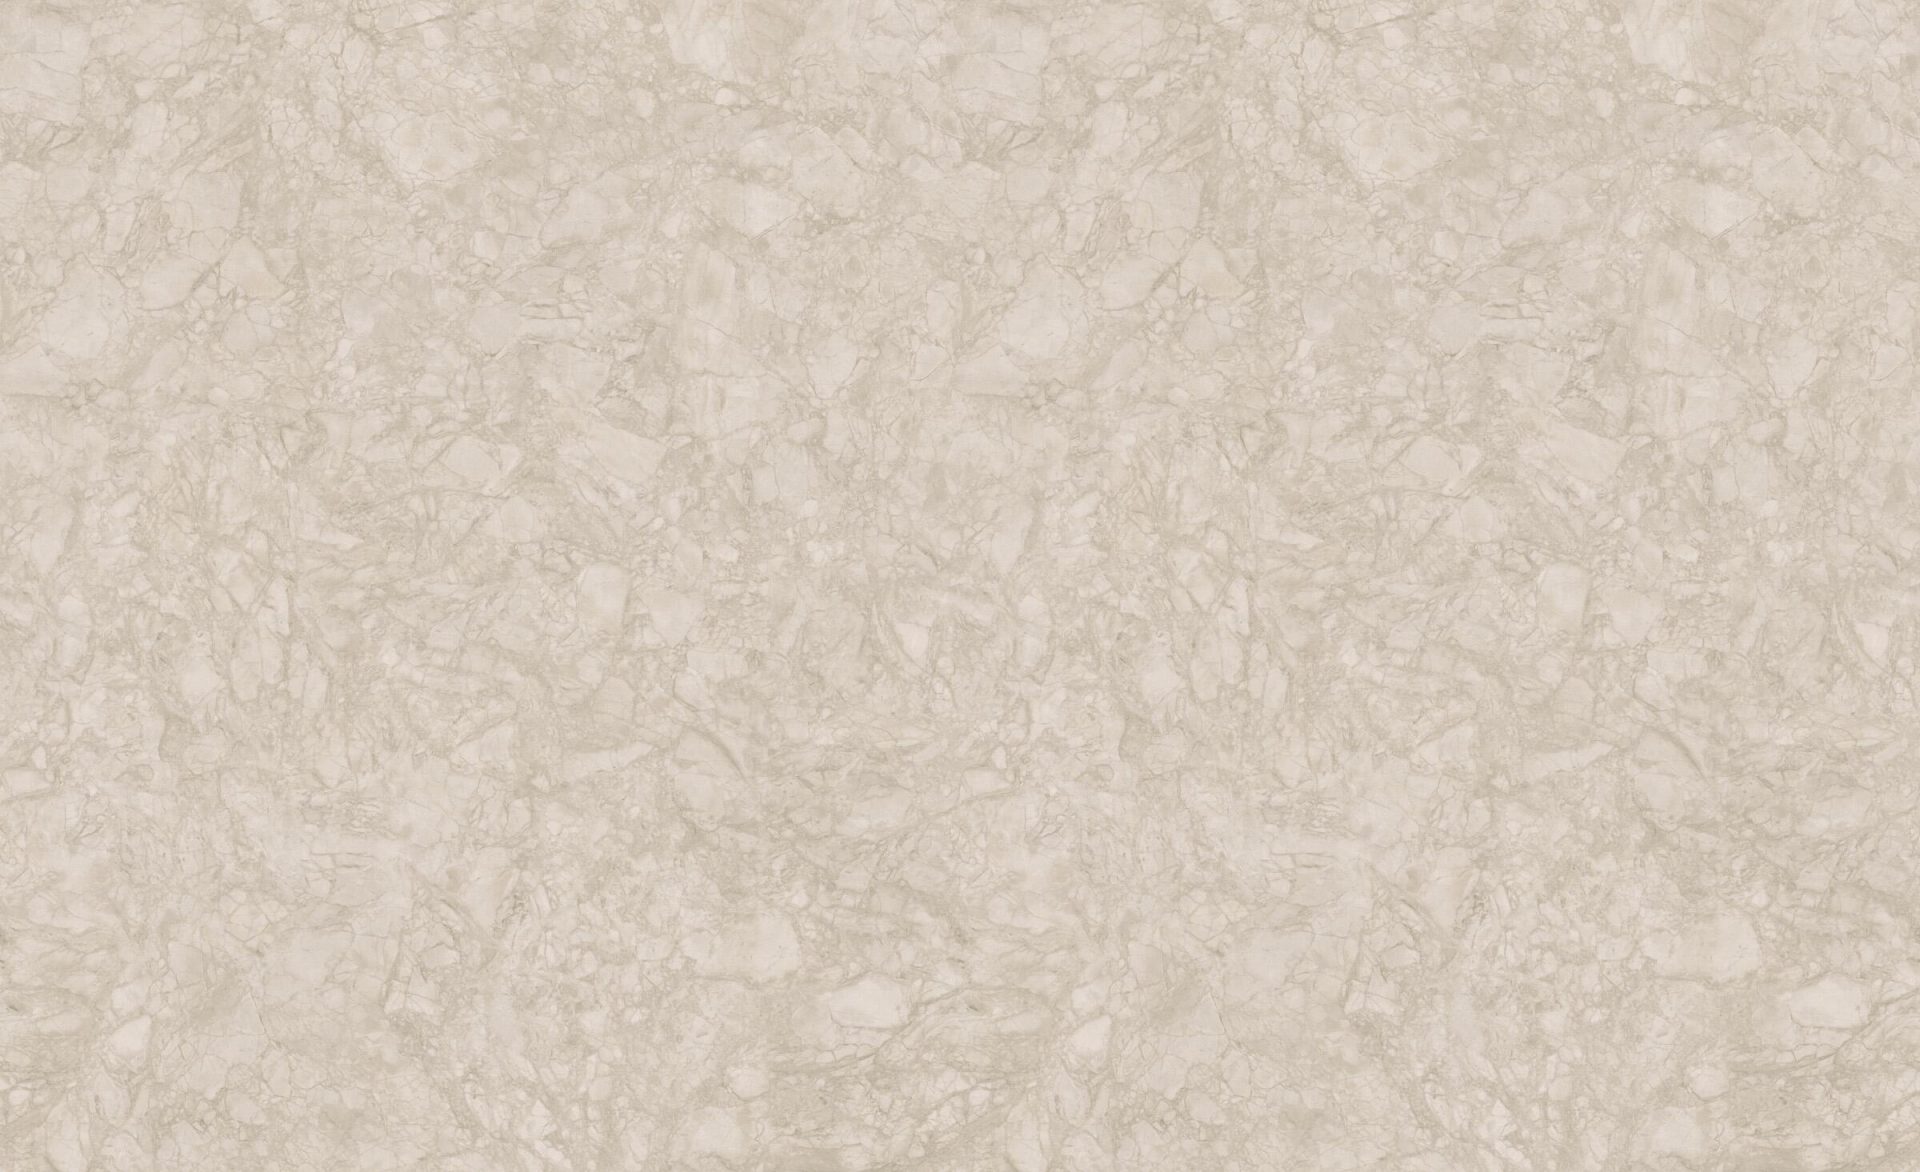 arenite cream countertop pattern